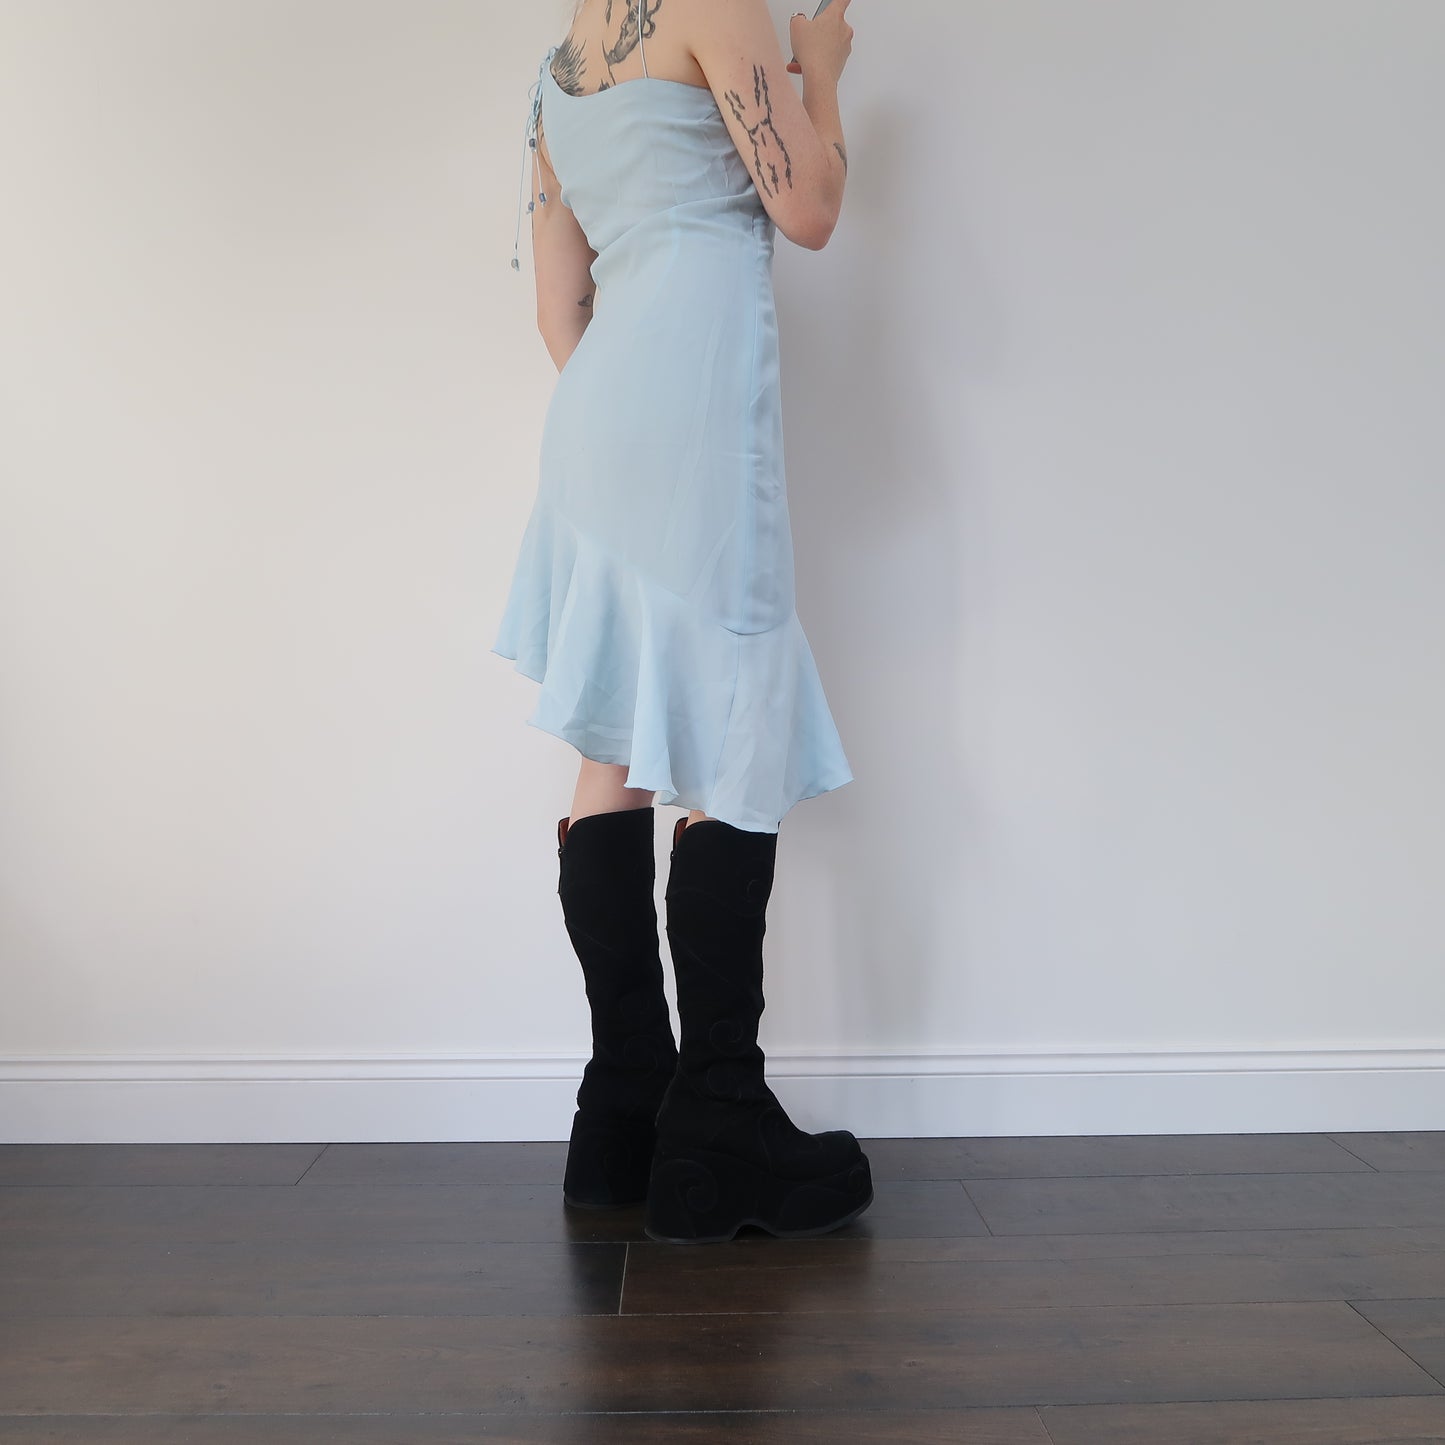 Baby blue asymmetric dress - size 10